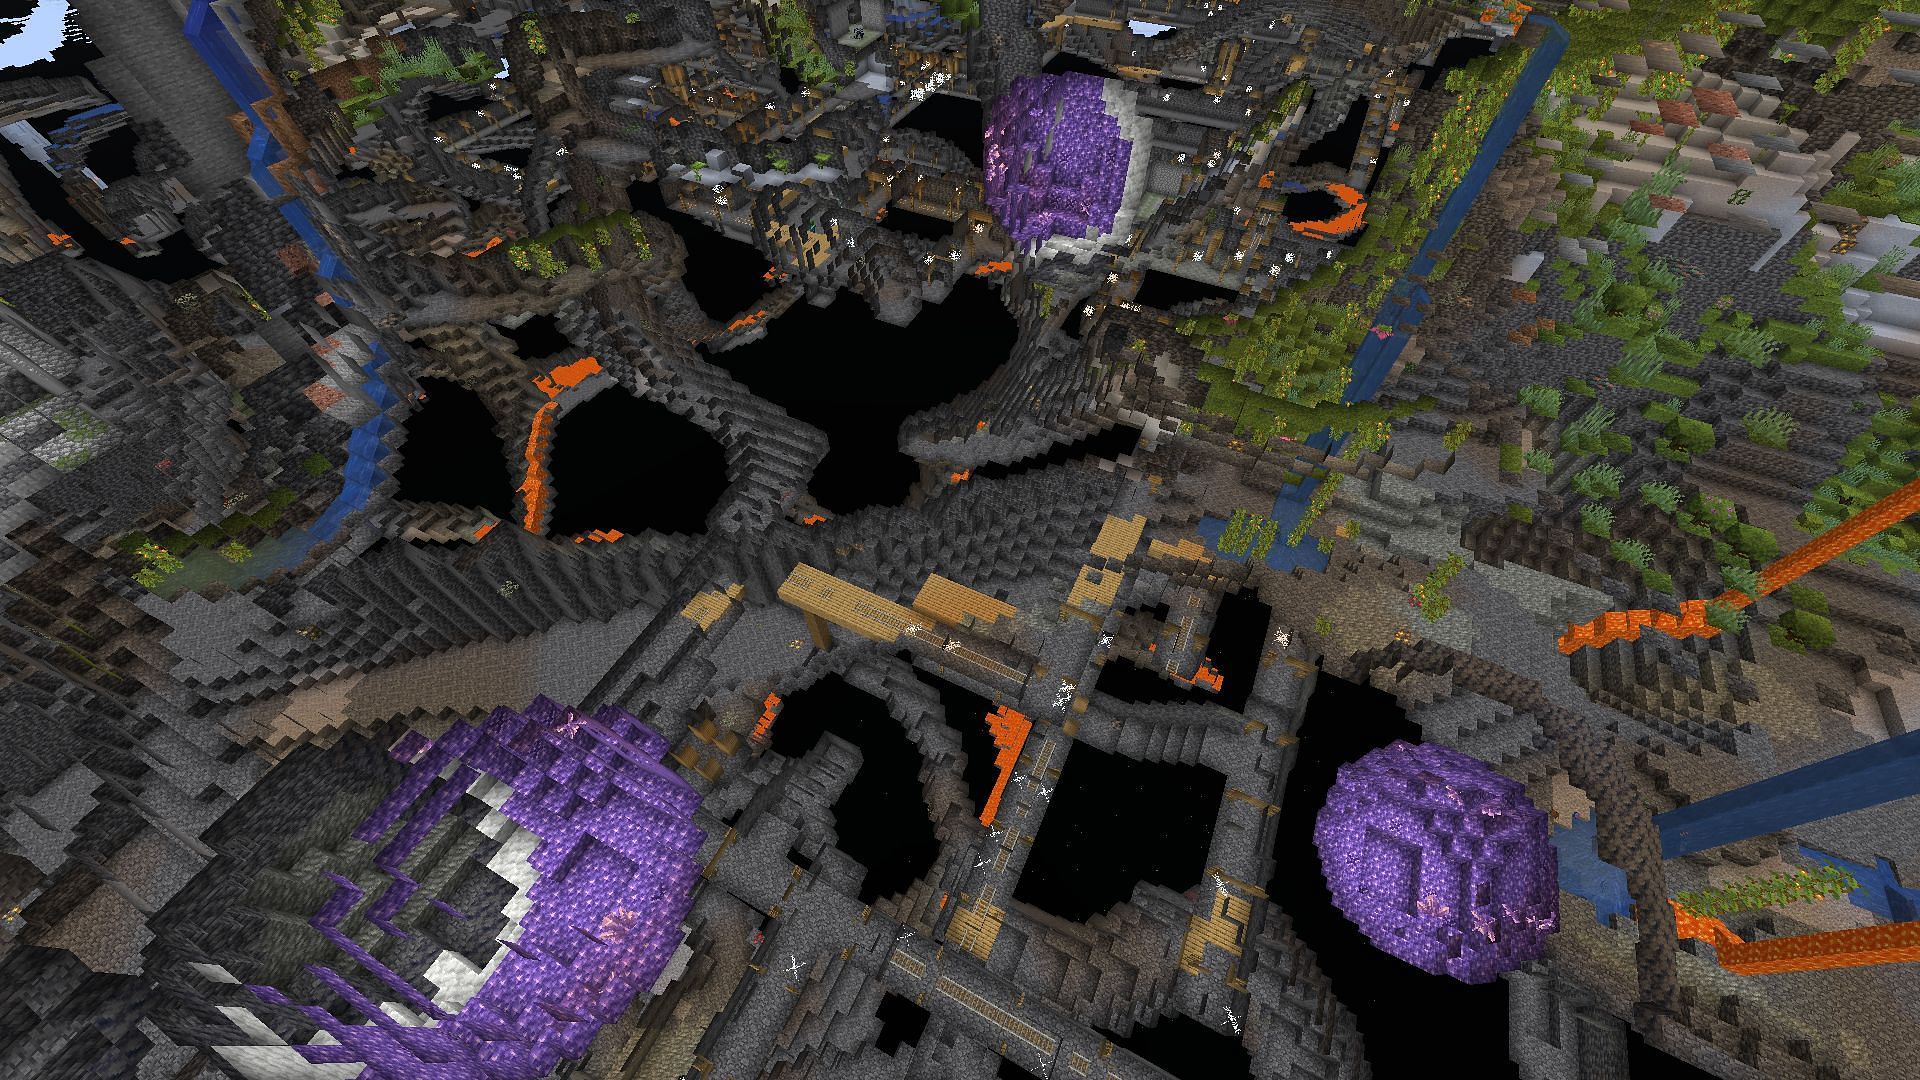 The three geodes found underneath the shipwreck (Image via Minecraft)